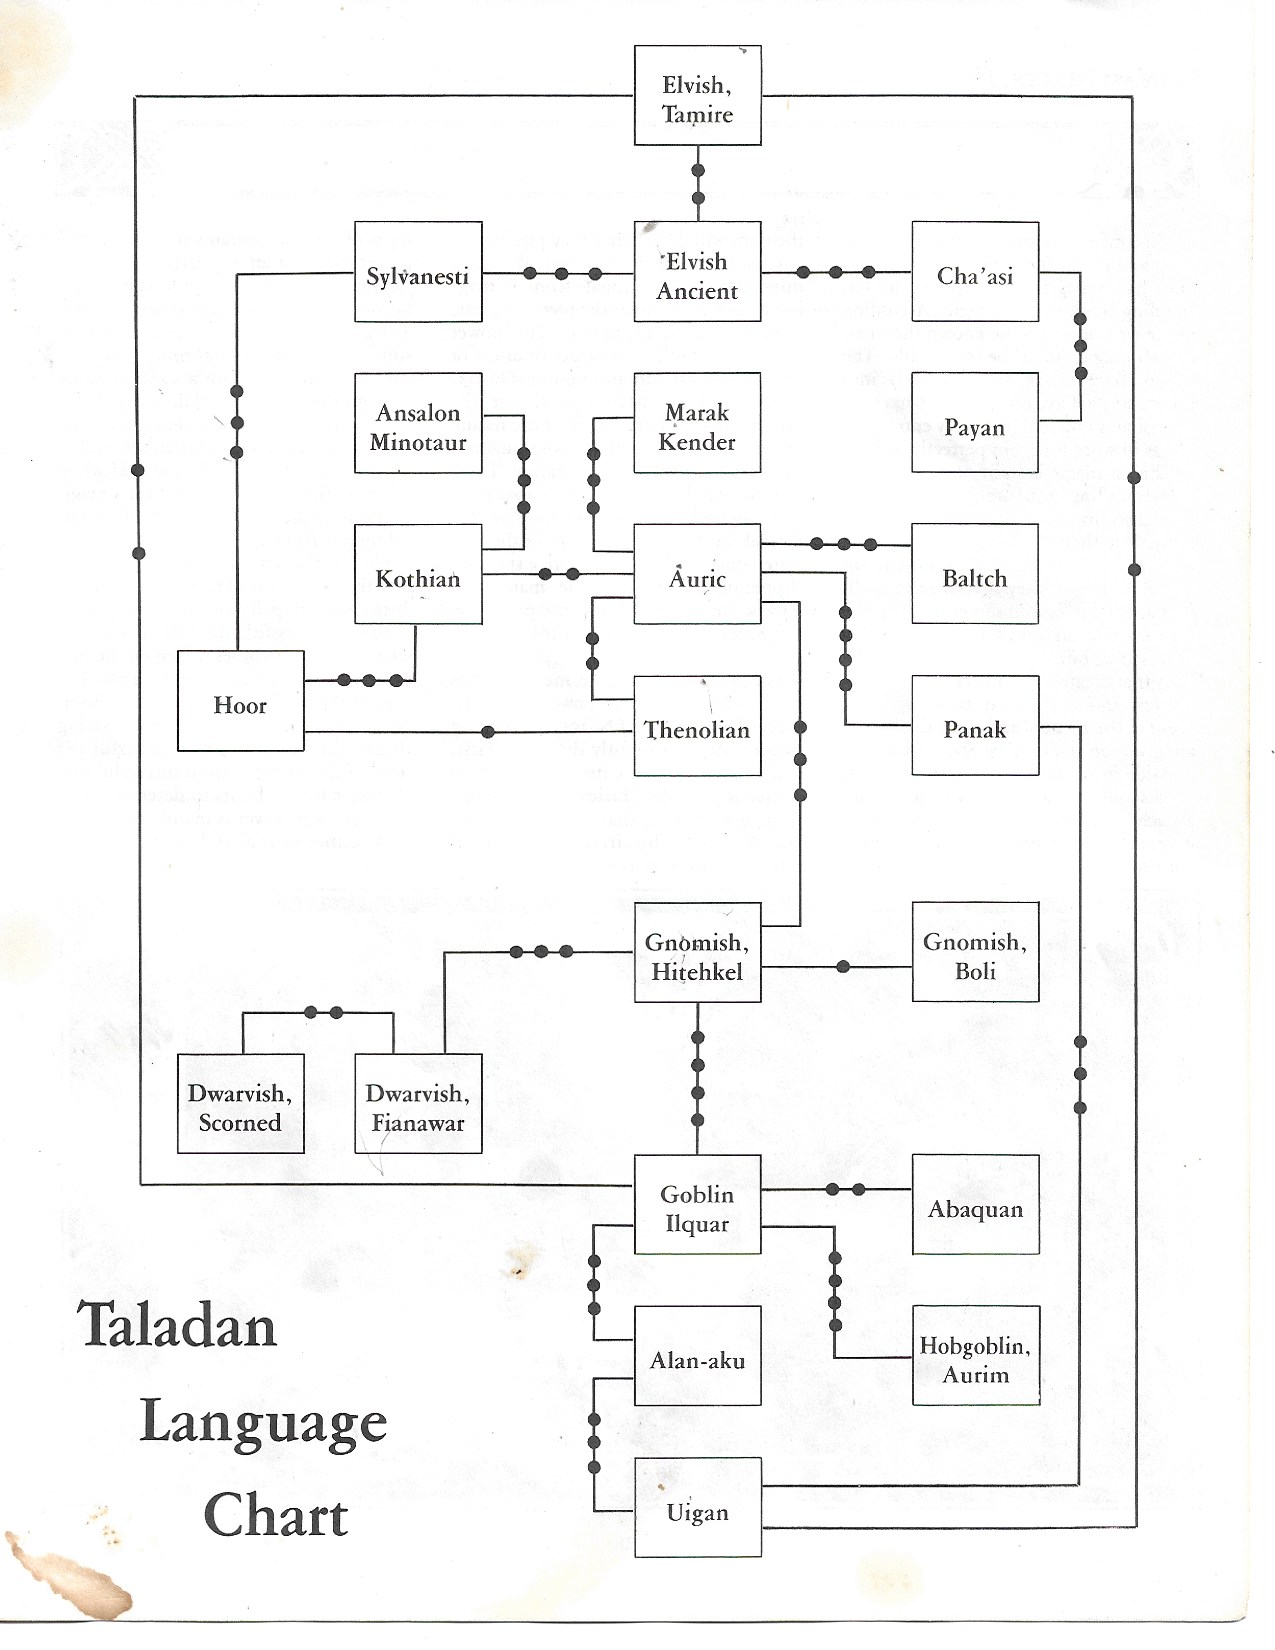 Taladan Language Chart.jpg